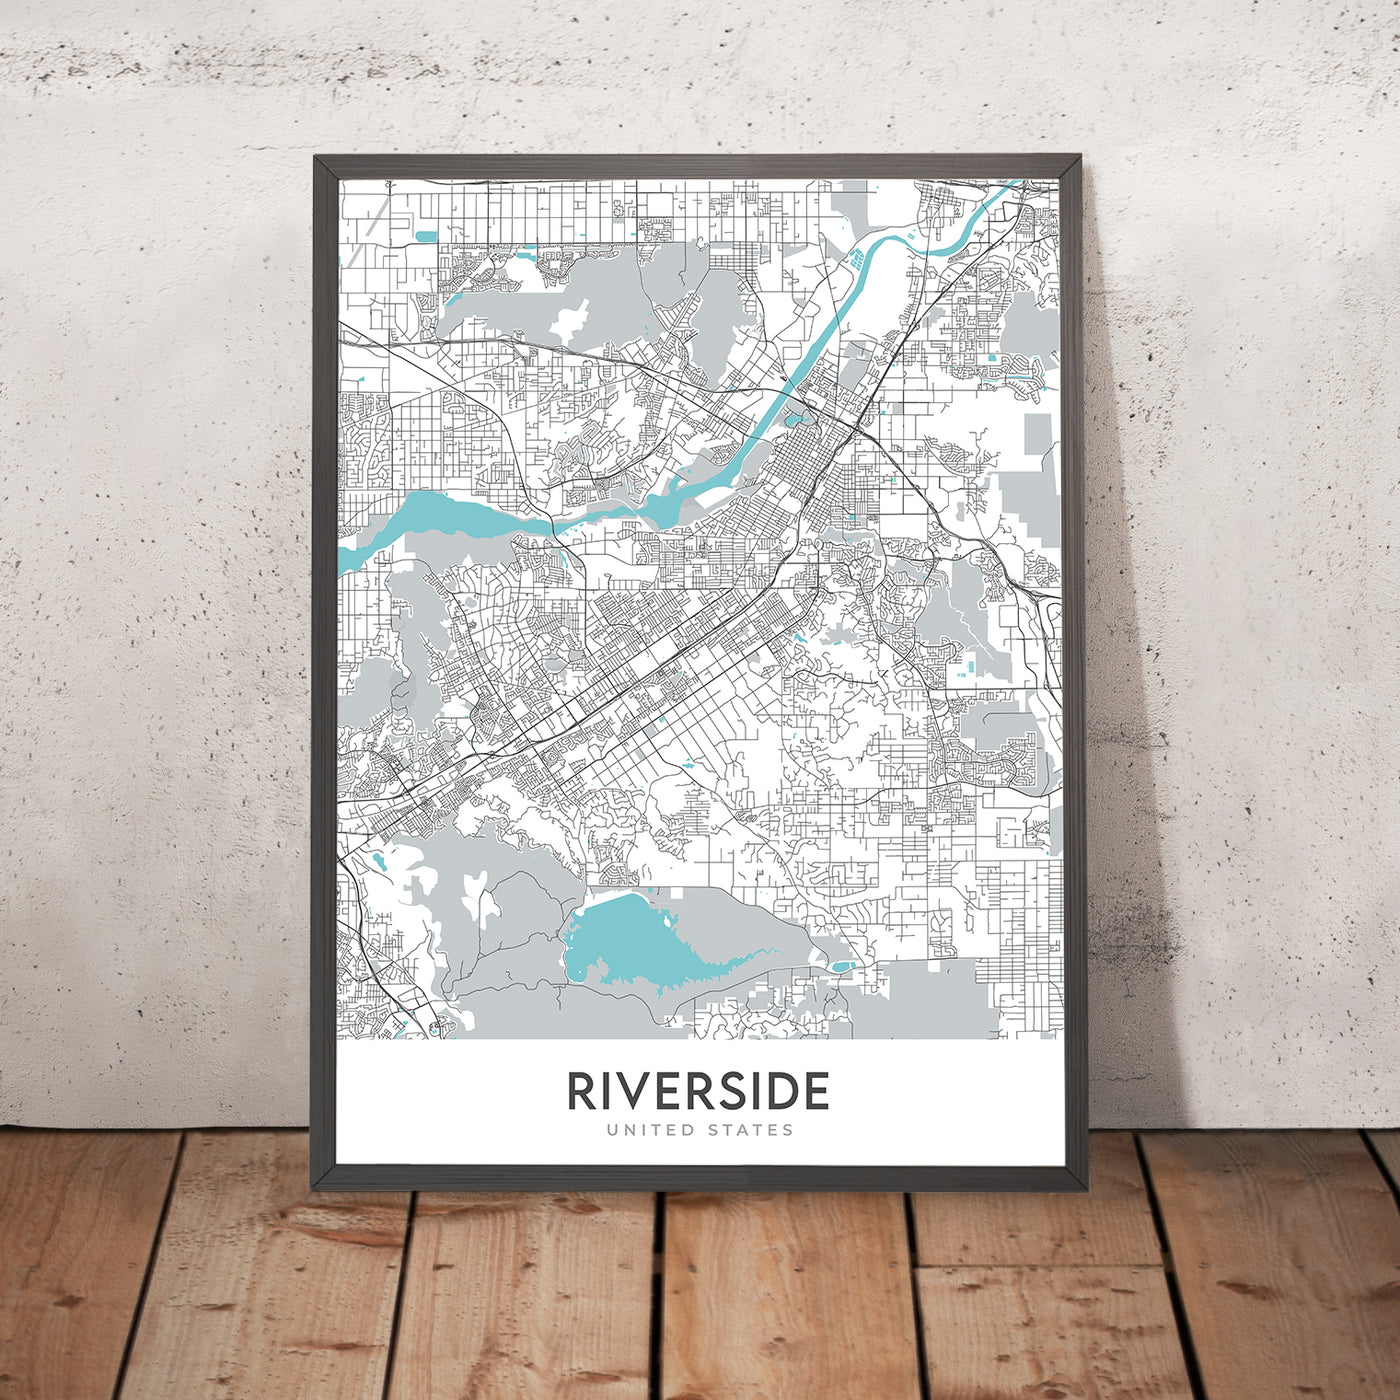 Moderner Stadtplan von Riverside, CA: Arlington, Downtown, La Sierra, Riverside Art Museum, University of California